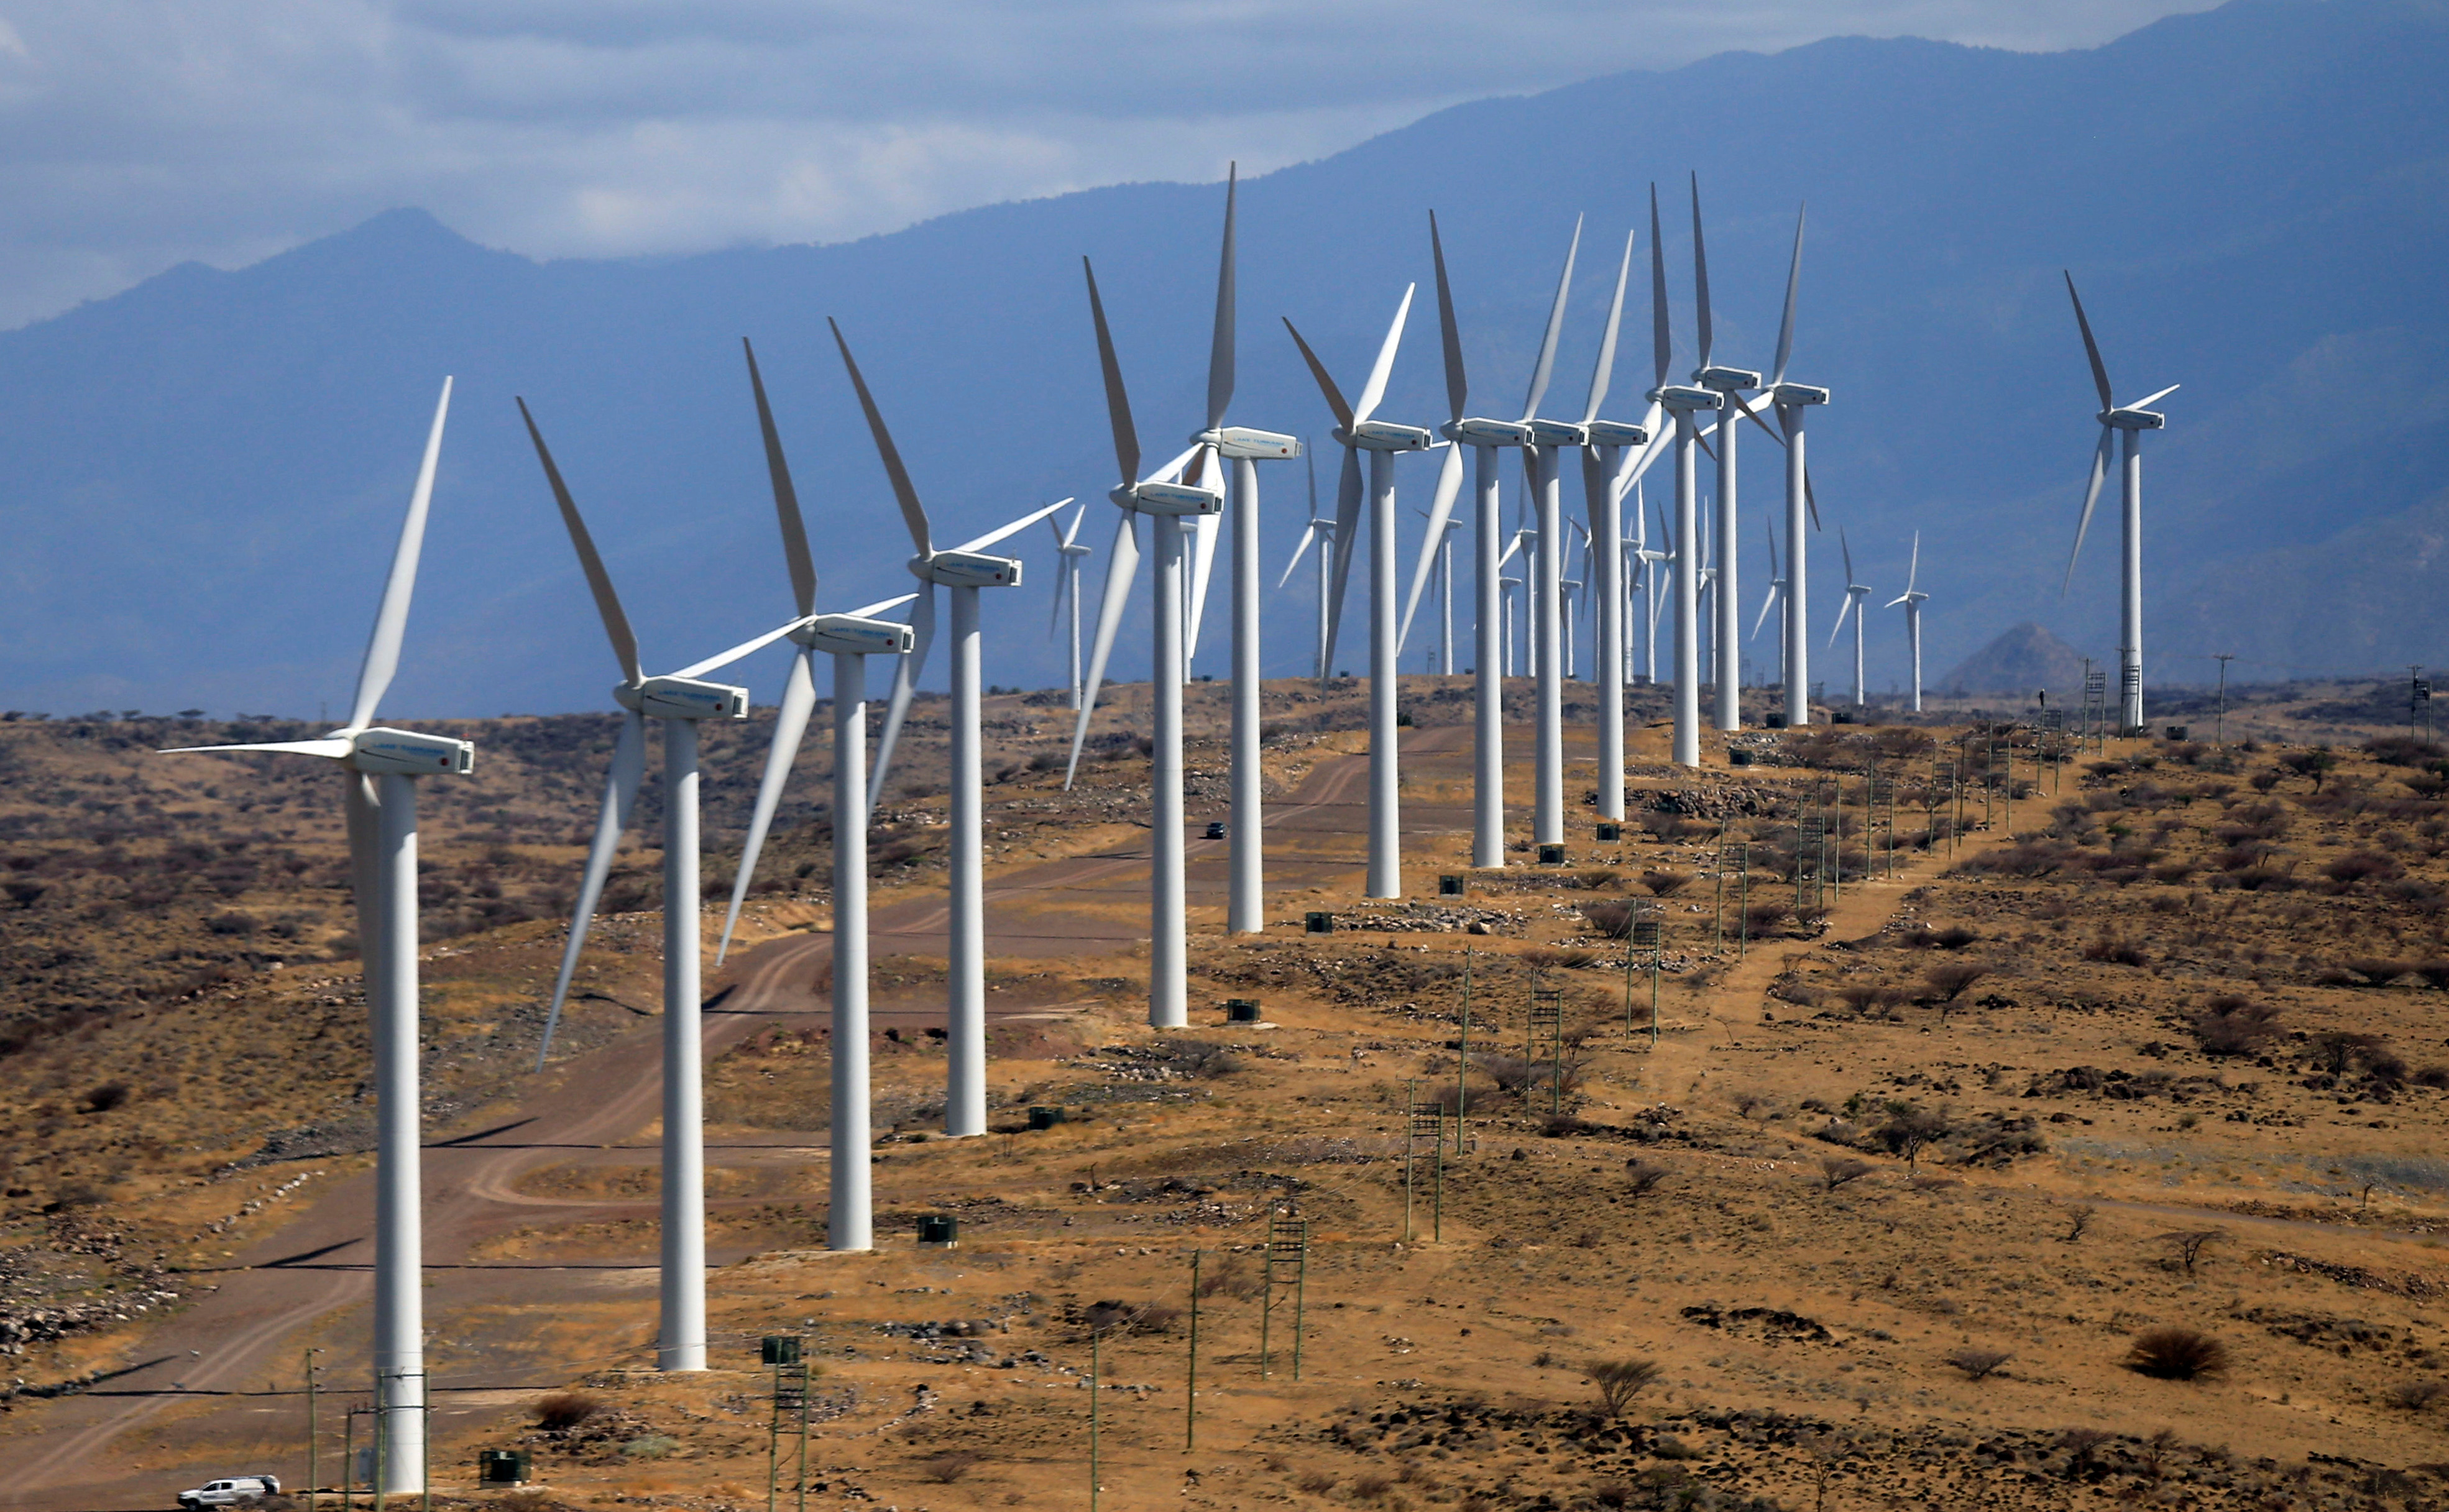 Kenya wind farm welcomed, but indigenous wonder who benefits most